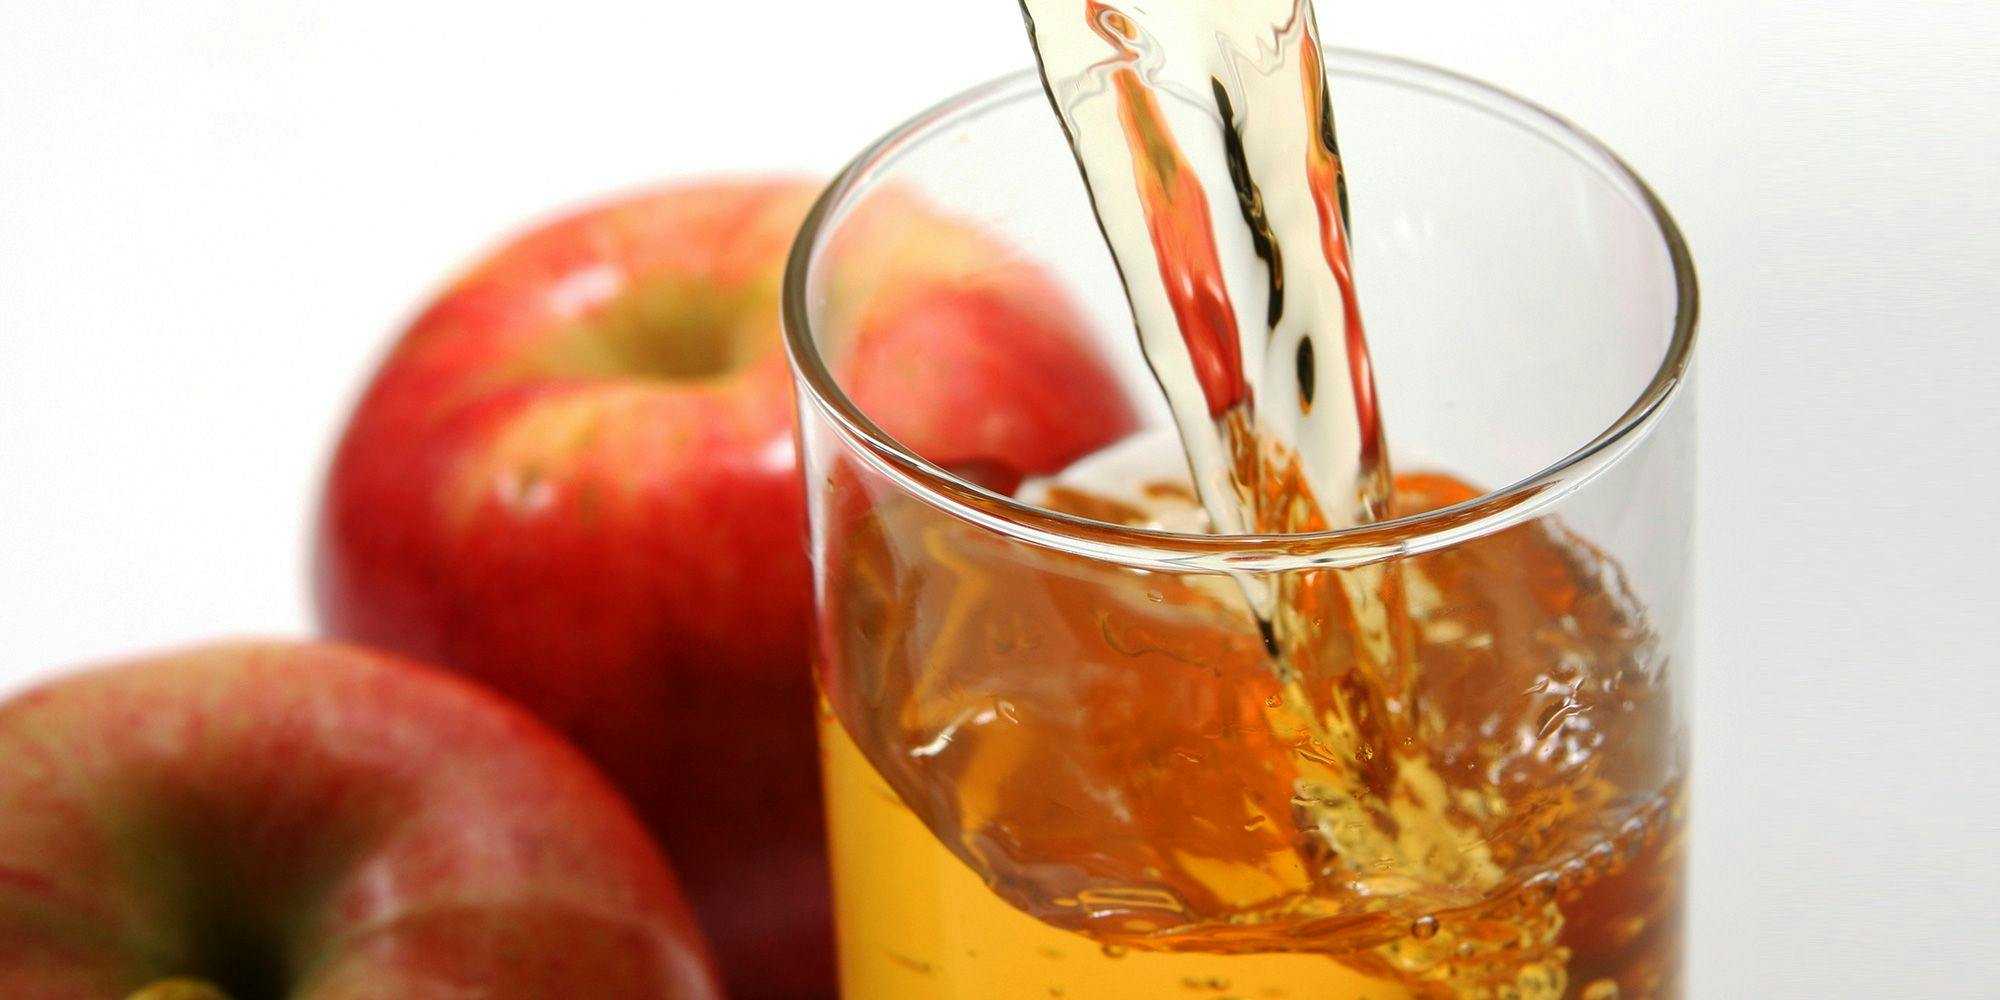 apple cider vinegar for weight loss